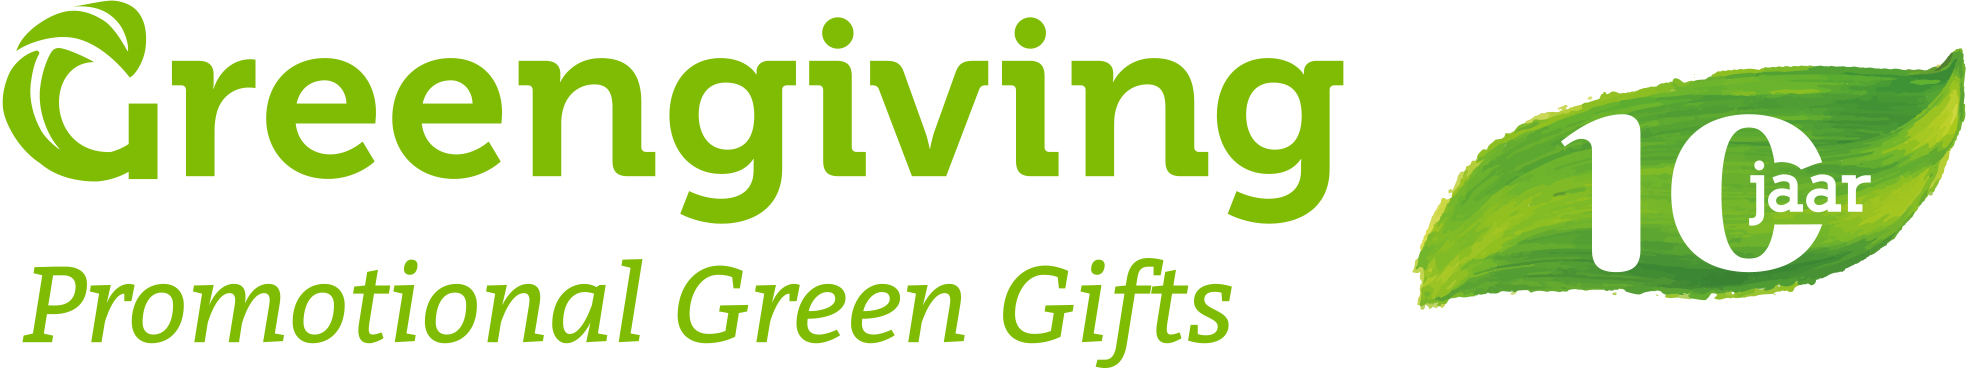 Greengiving logo incl. pay off en 10 jaar embleem ENG.jpg